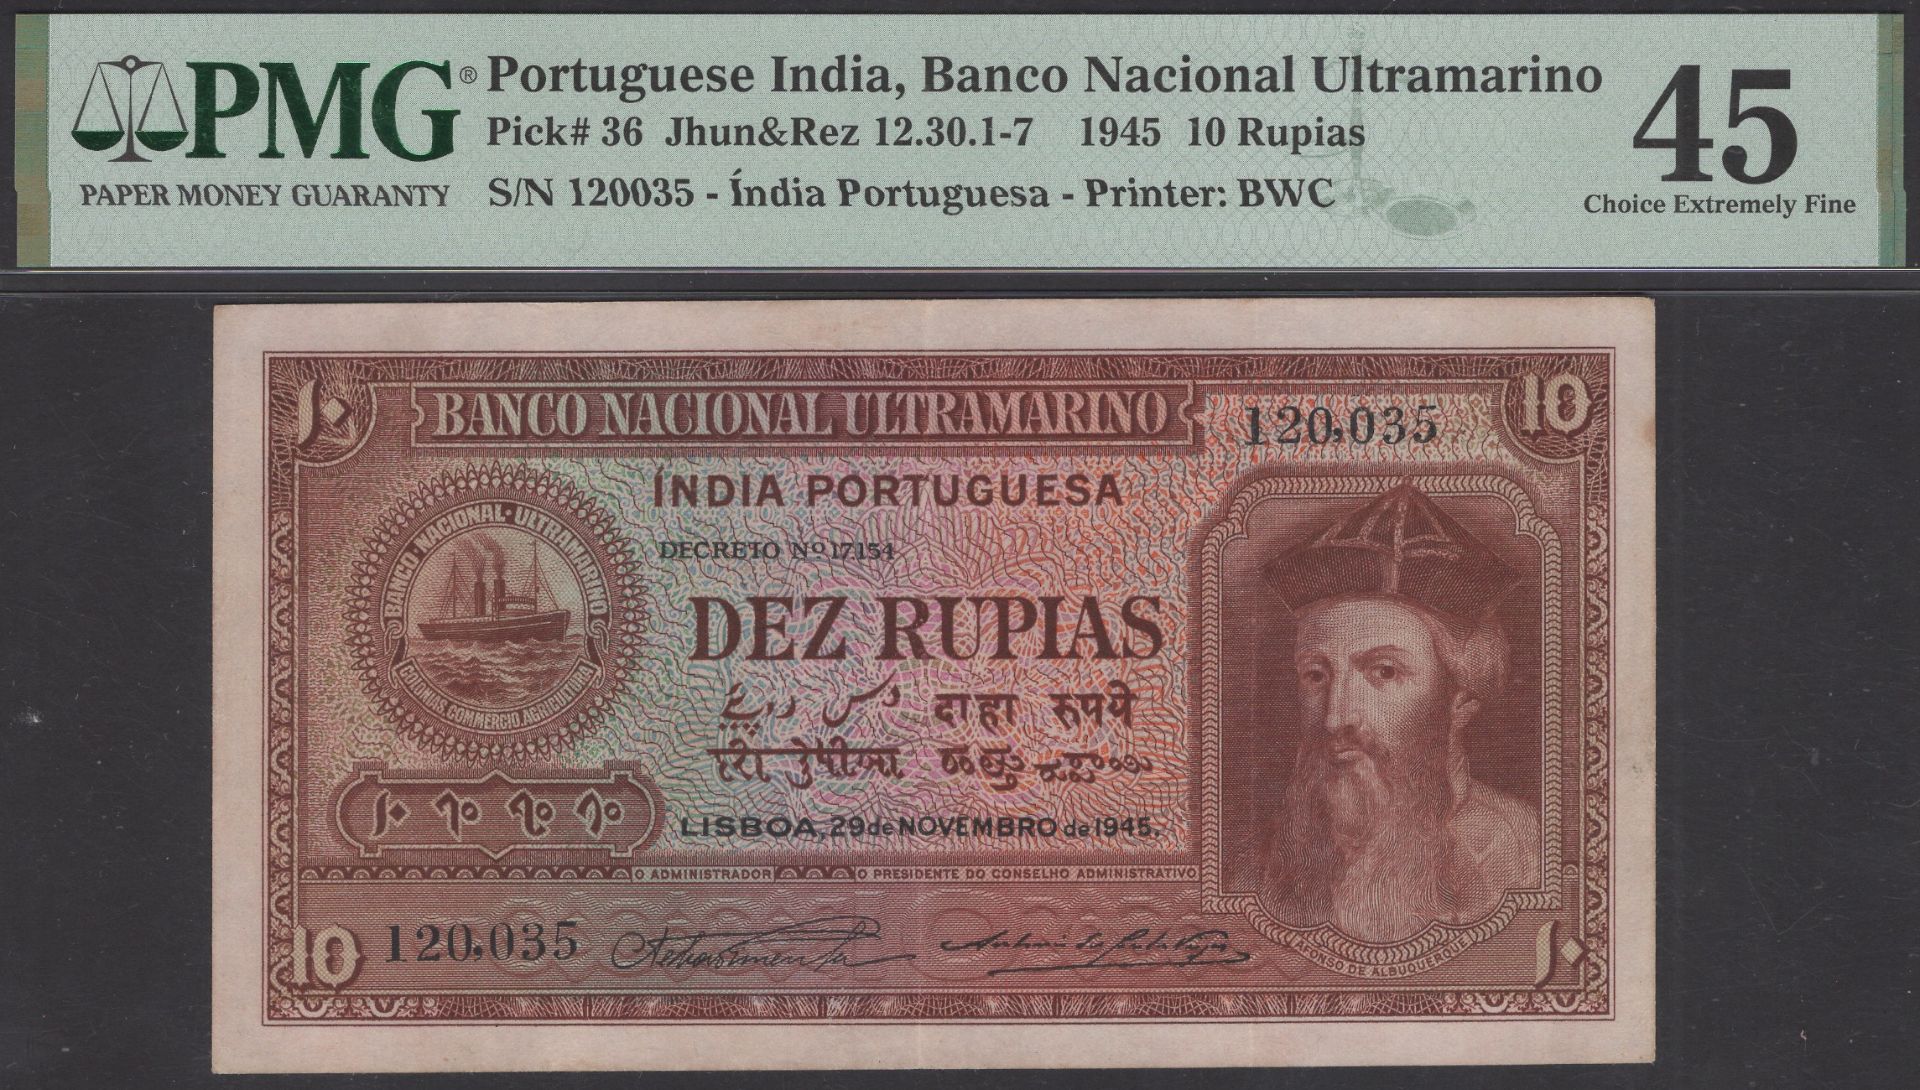 Banco Nacional Ultramarino, Portuguese India, 10 Rupias, 29 November 1945, serial number 120...